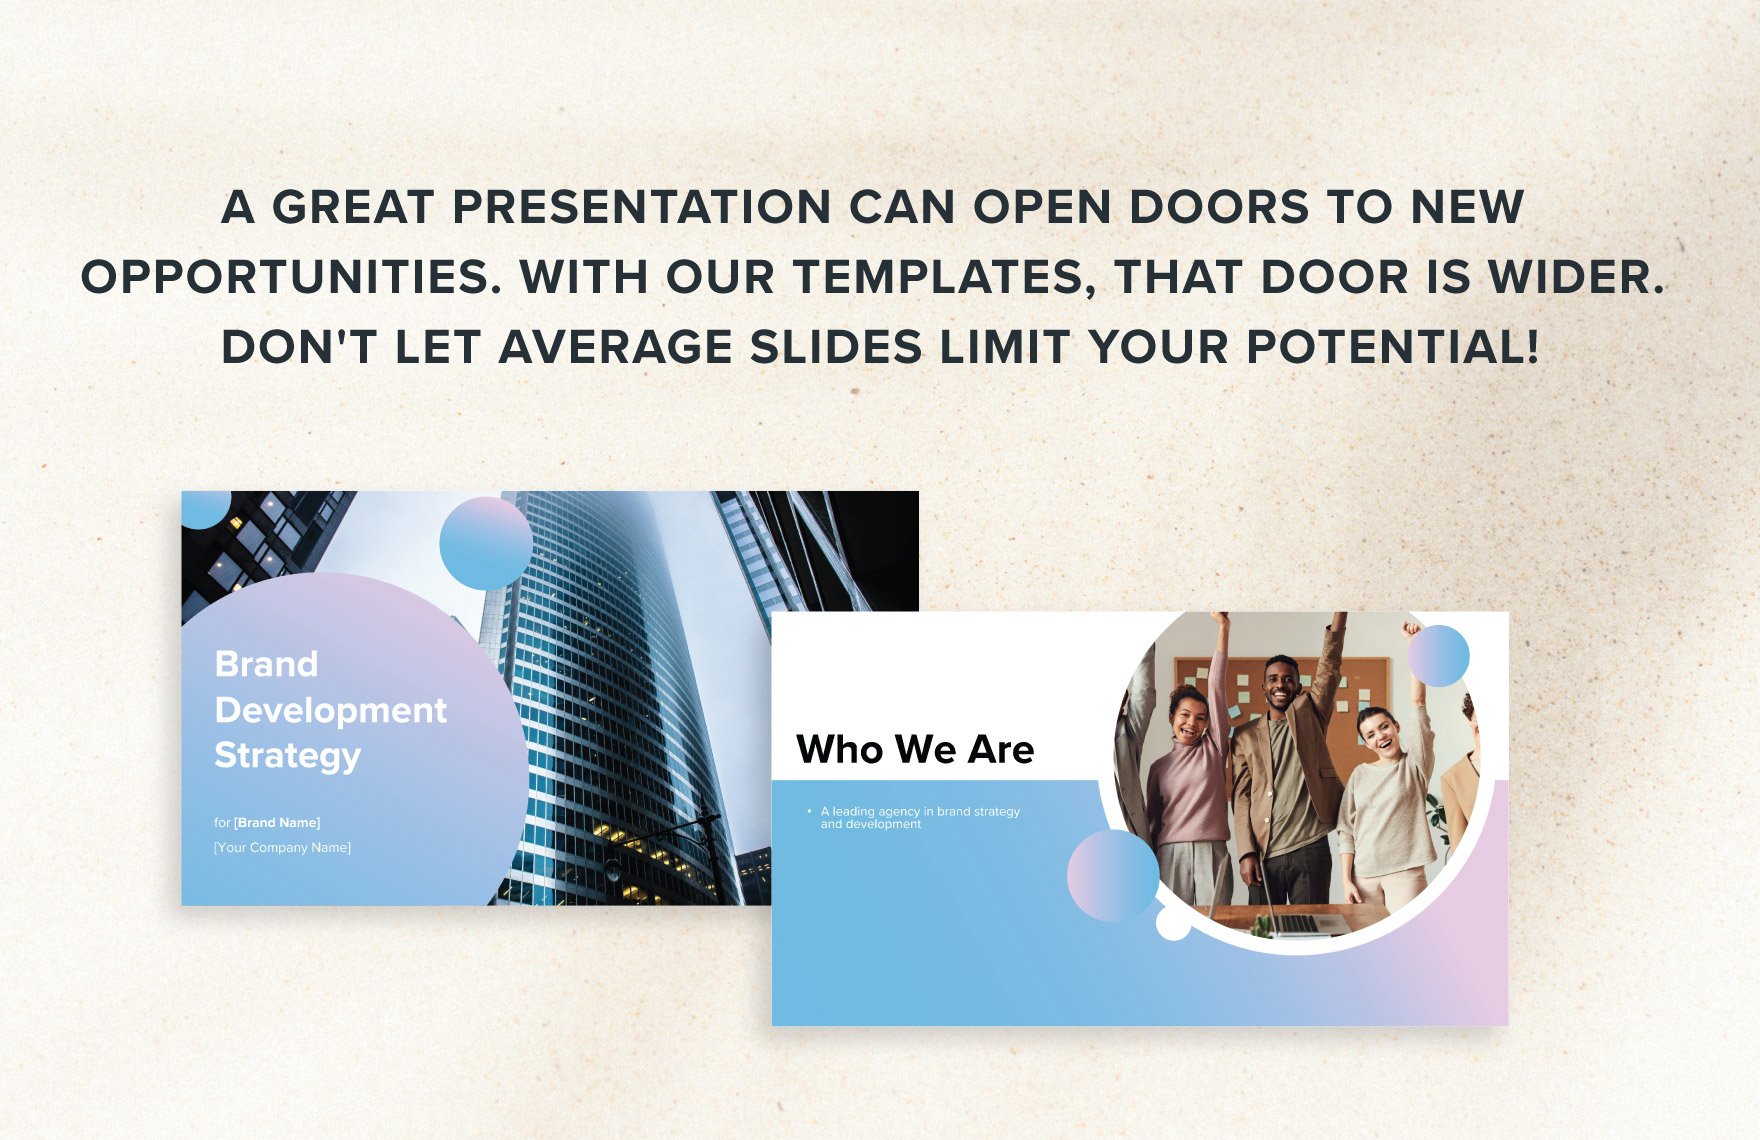 Brand Development Strategy Presentation Template